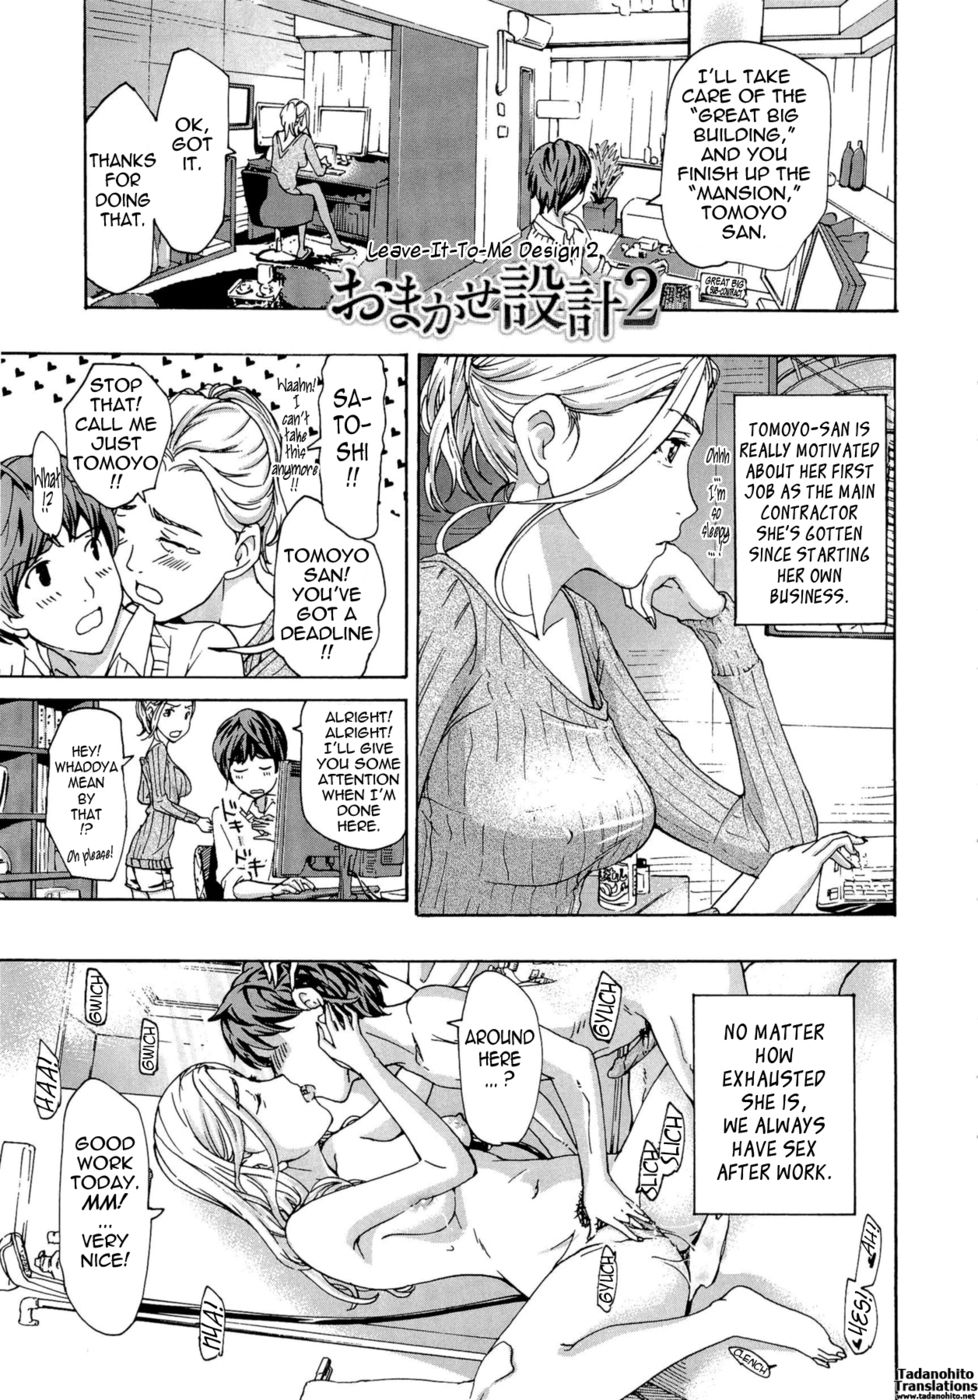 Hentai Manga Comic-Leave It To Me Design-Chapter 2-1